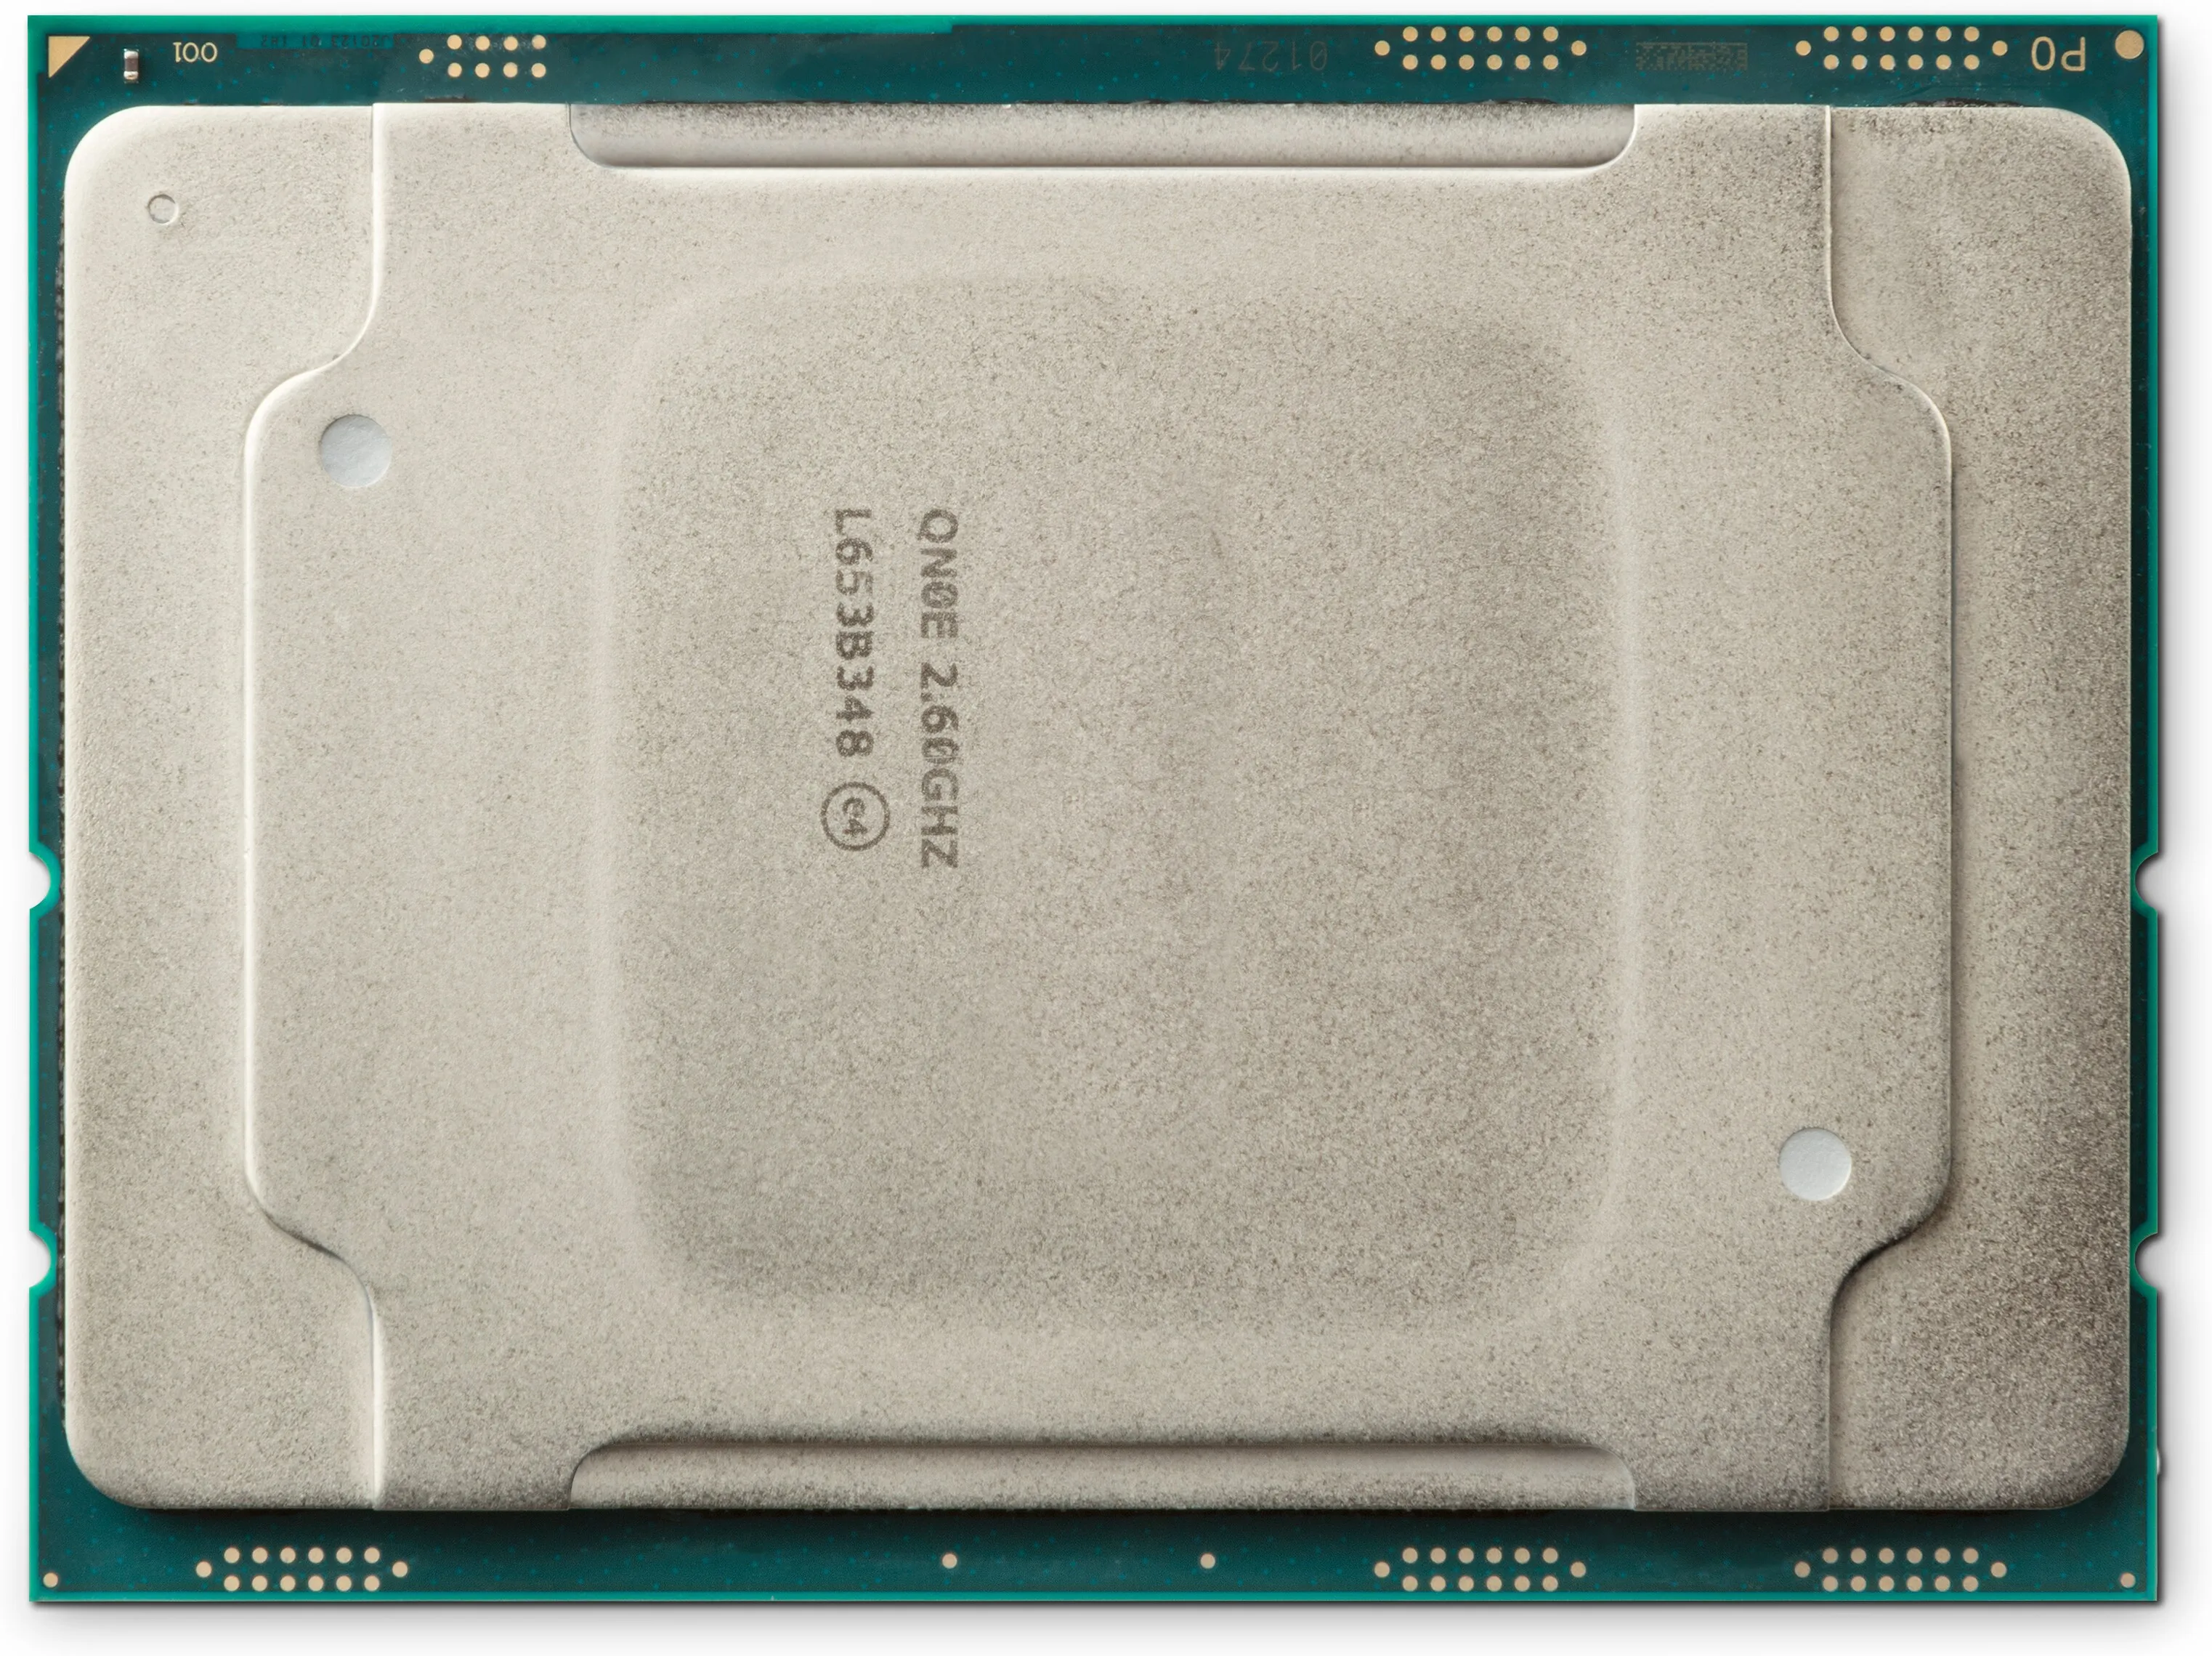 Vente HP Z6G4 Xeon 6226 2.8 2933 12C 125W HP au meilleur prix - visuel 4